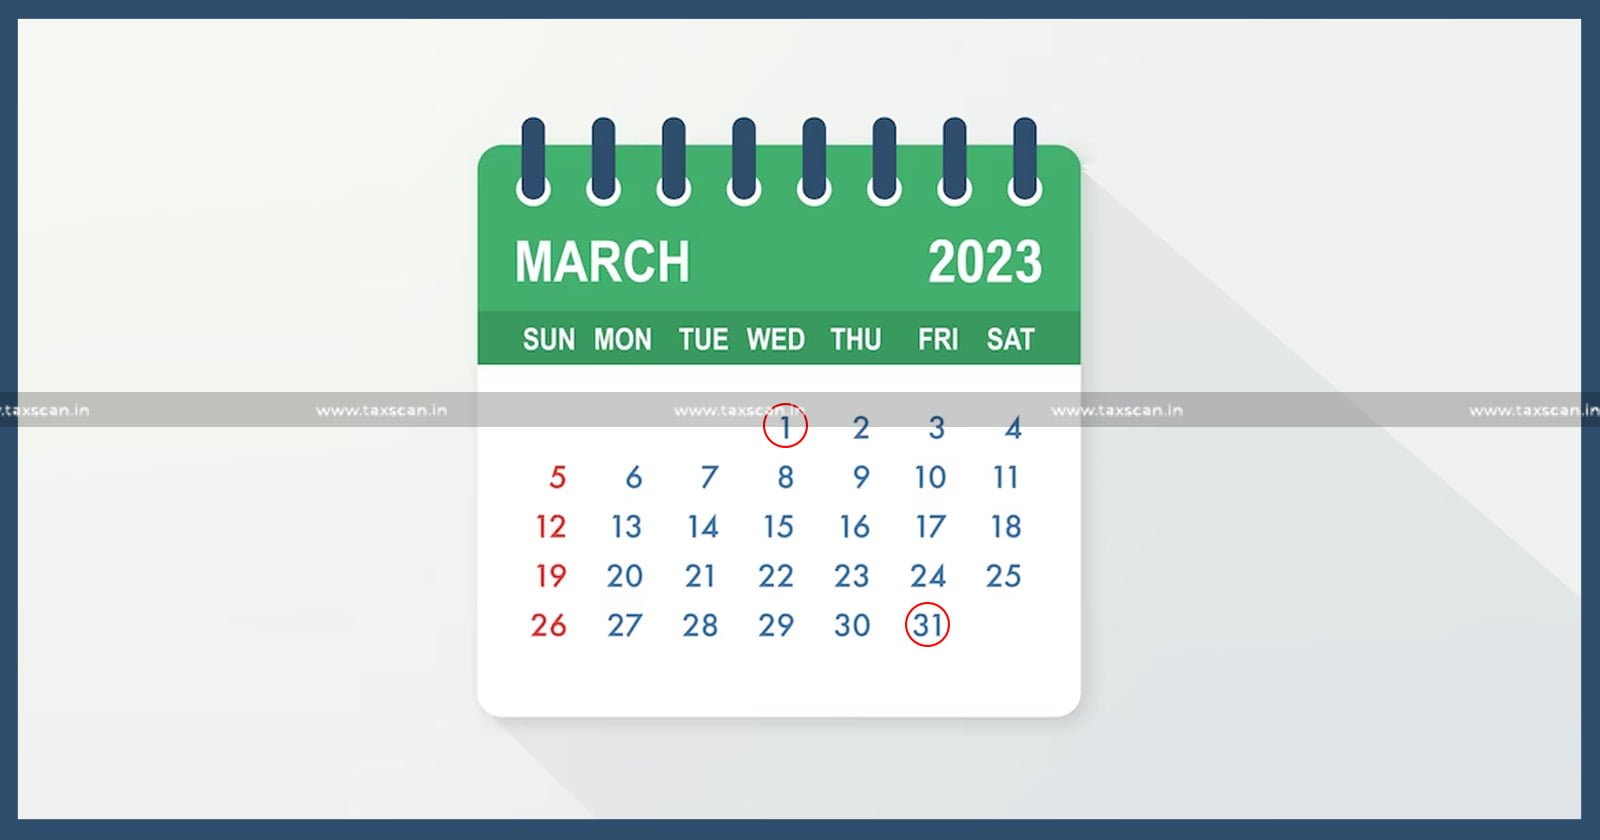 Due Dates - Due Dates for Income Tax Compliances - Income Tax Compliances - March 2023 - income tax checklist - march income tax filings - income tax filings march 2023 - Taxscan